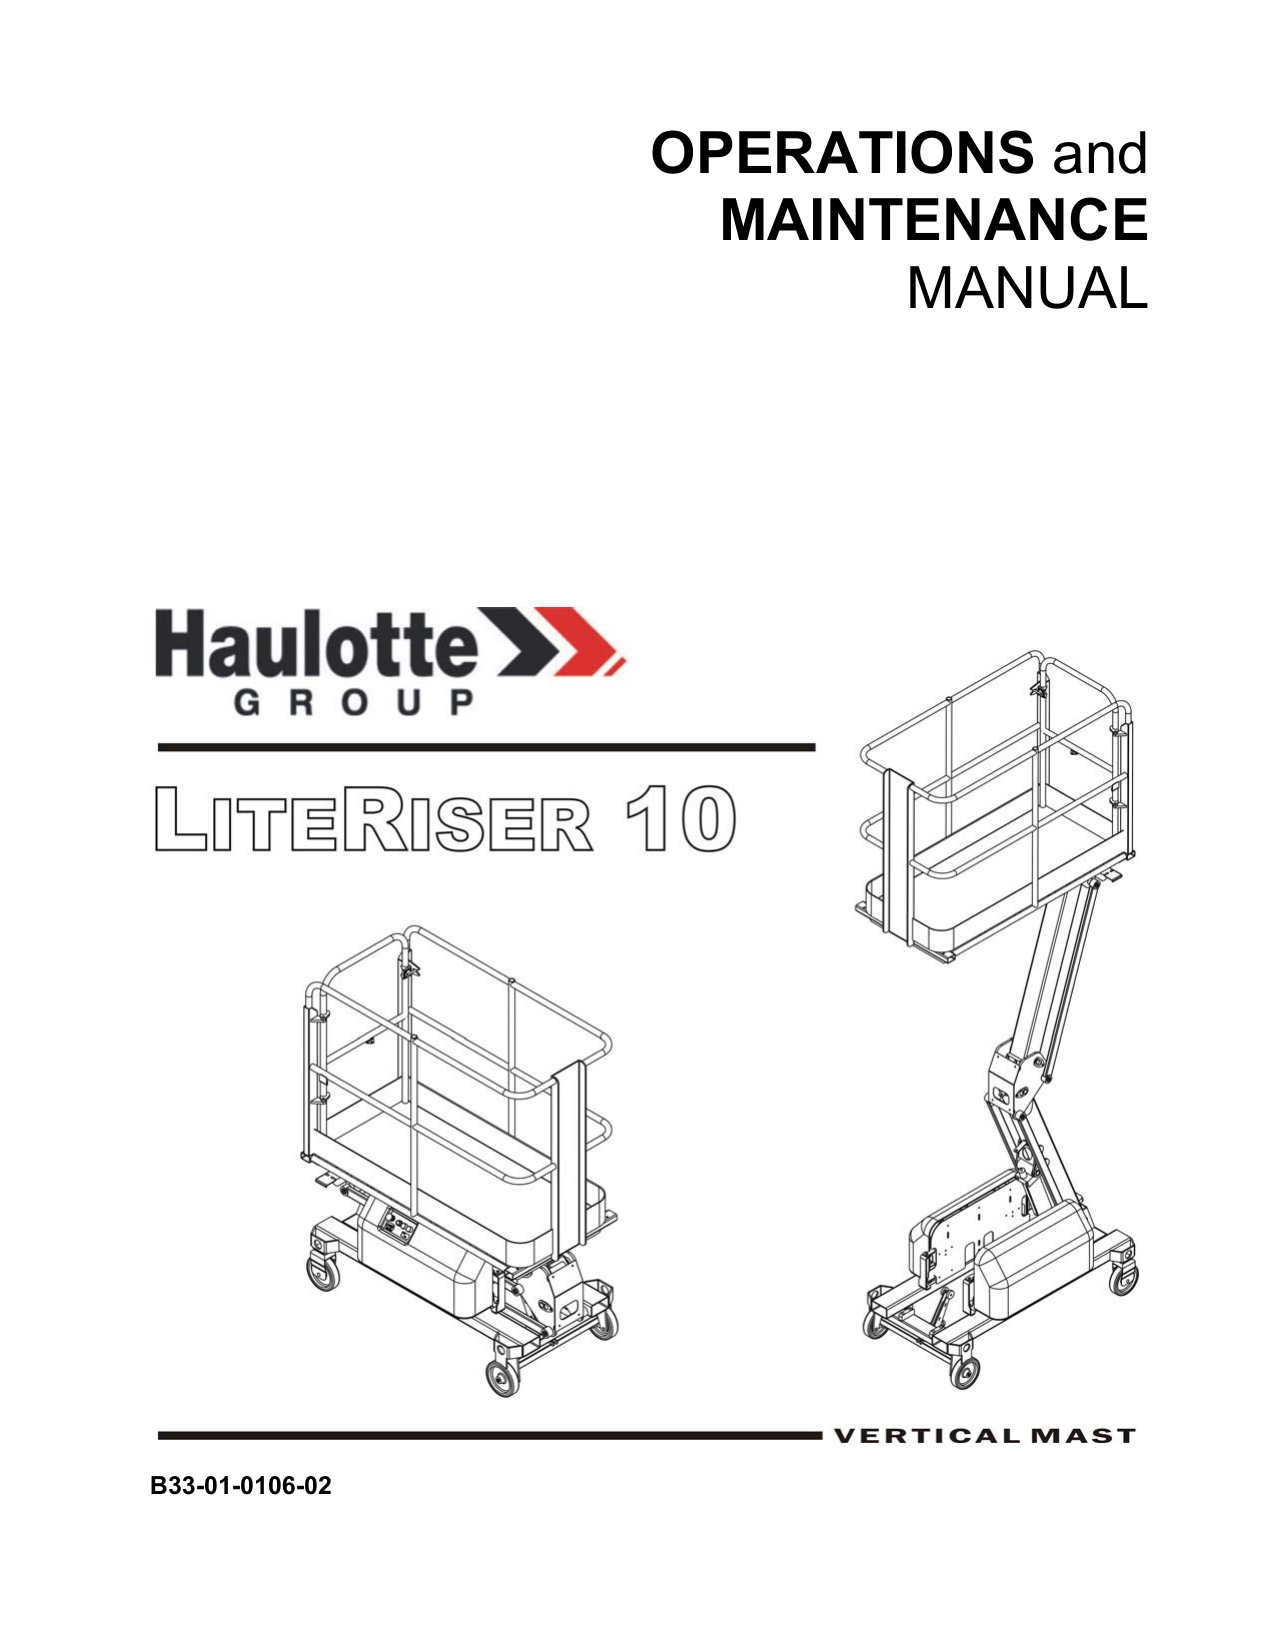 haulotte ha15ip service manual